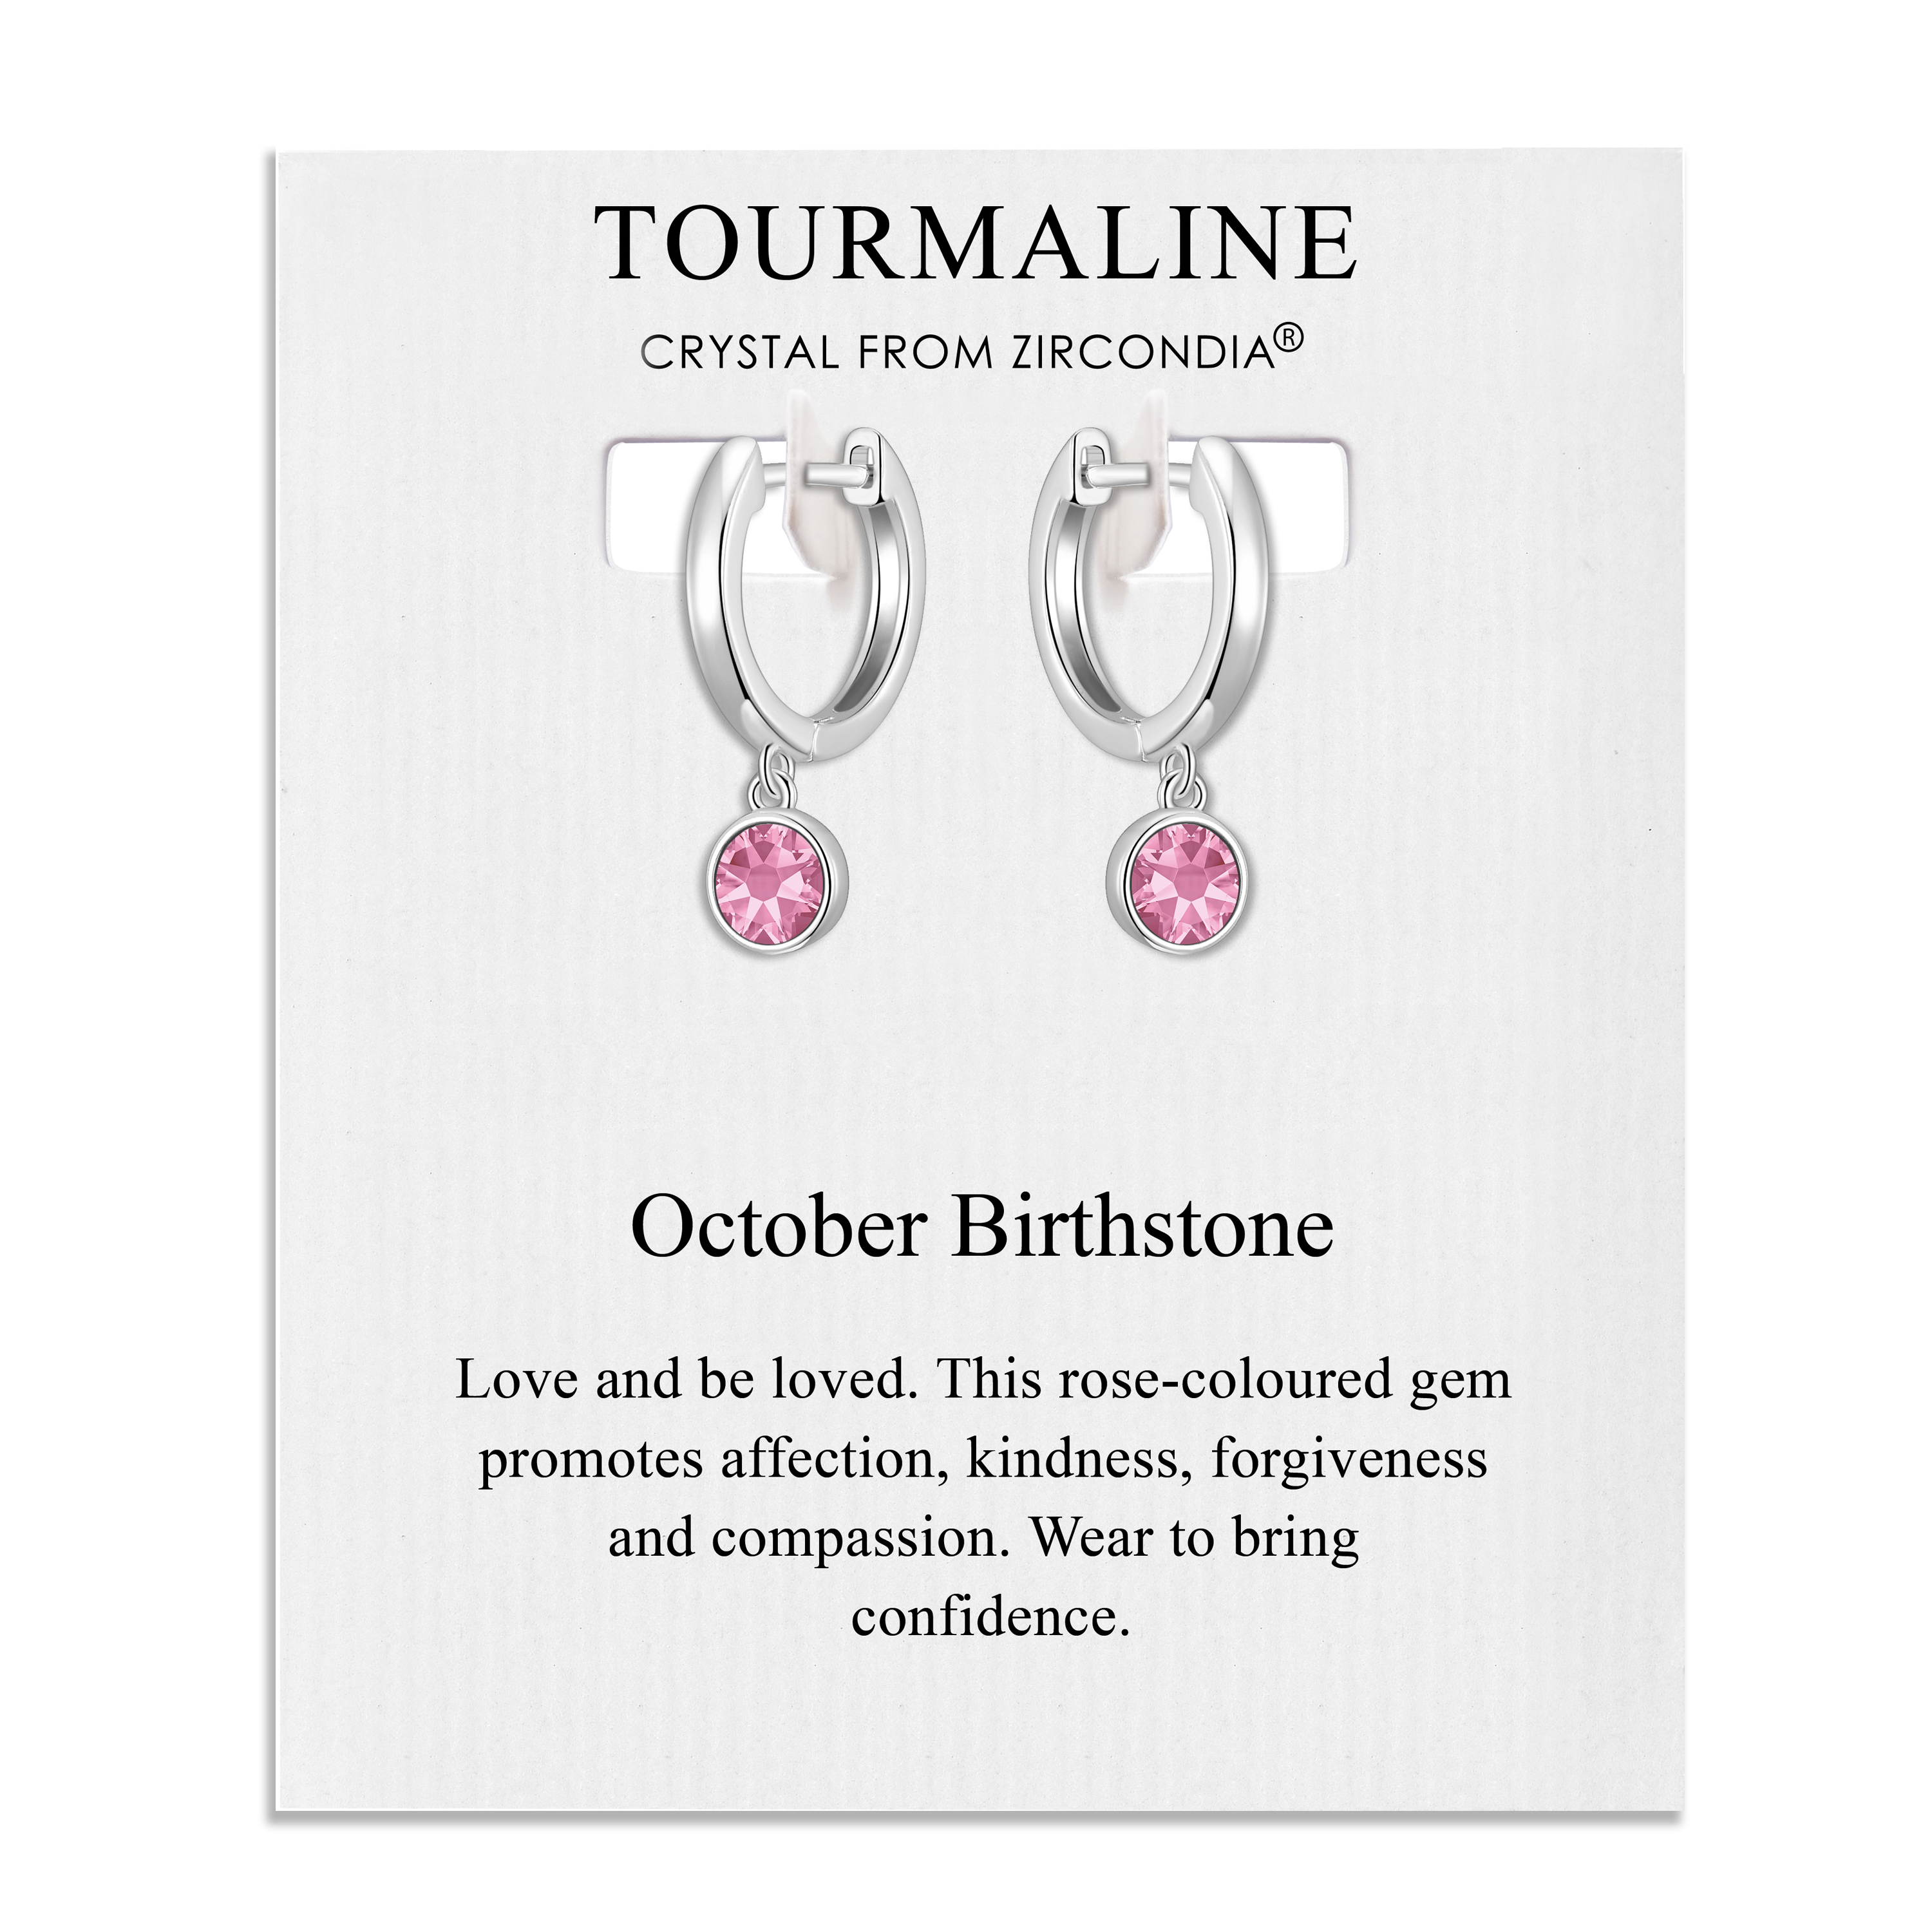 October Birthstone Hoop Earrings Created with Tourmaline Zircondia® Crystals by Philip Jones Jewellery